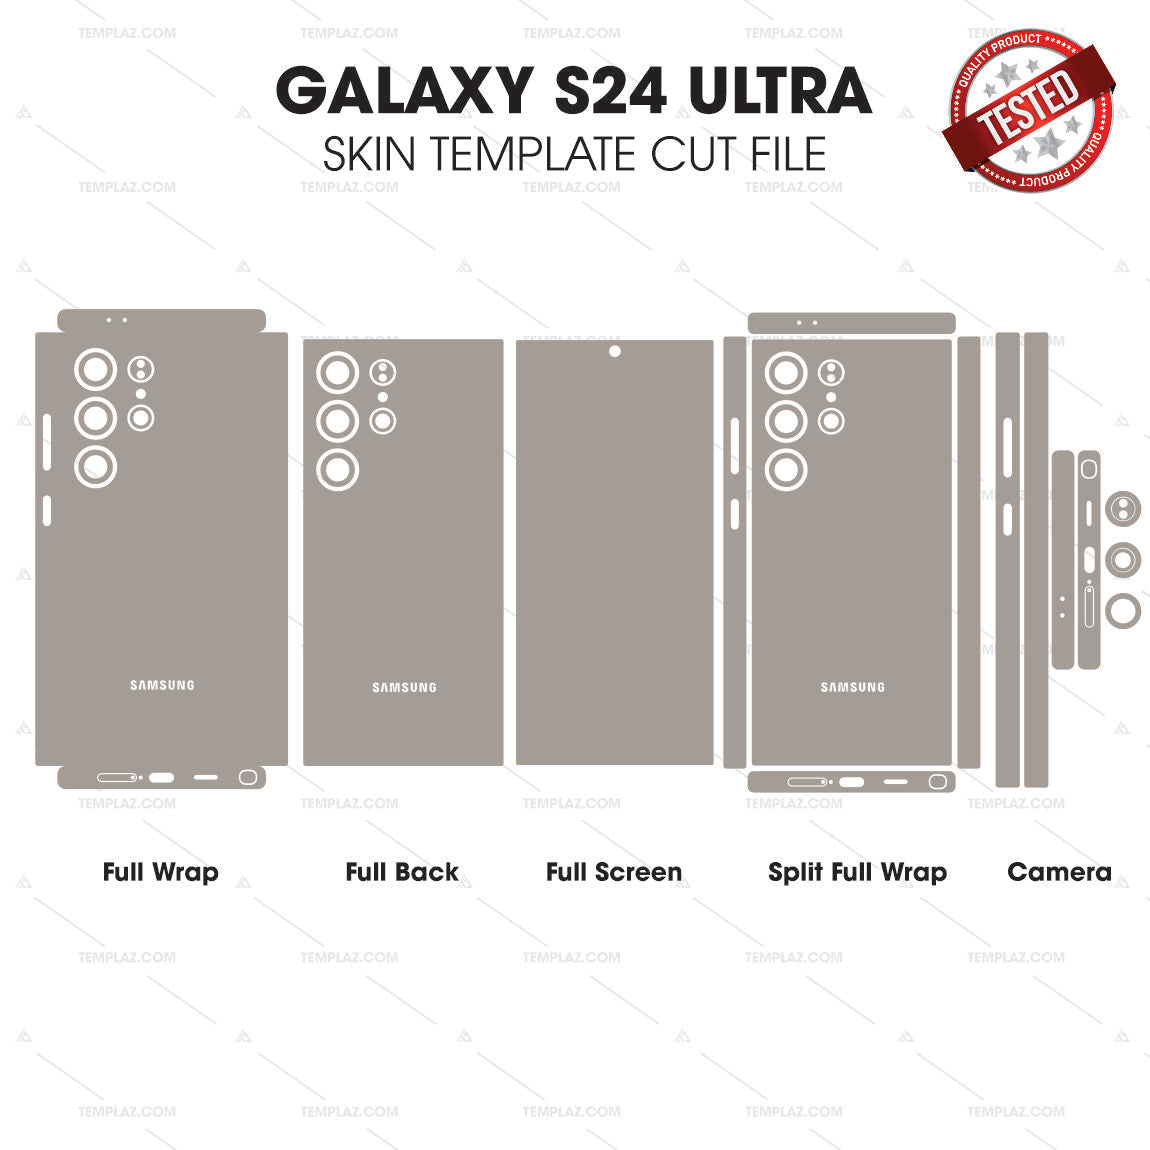 Samsung Galaxy S24 Ultra skin template vector download